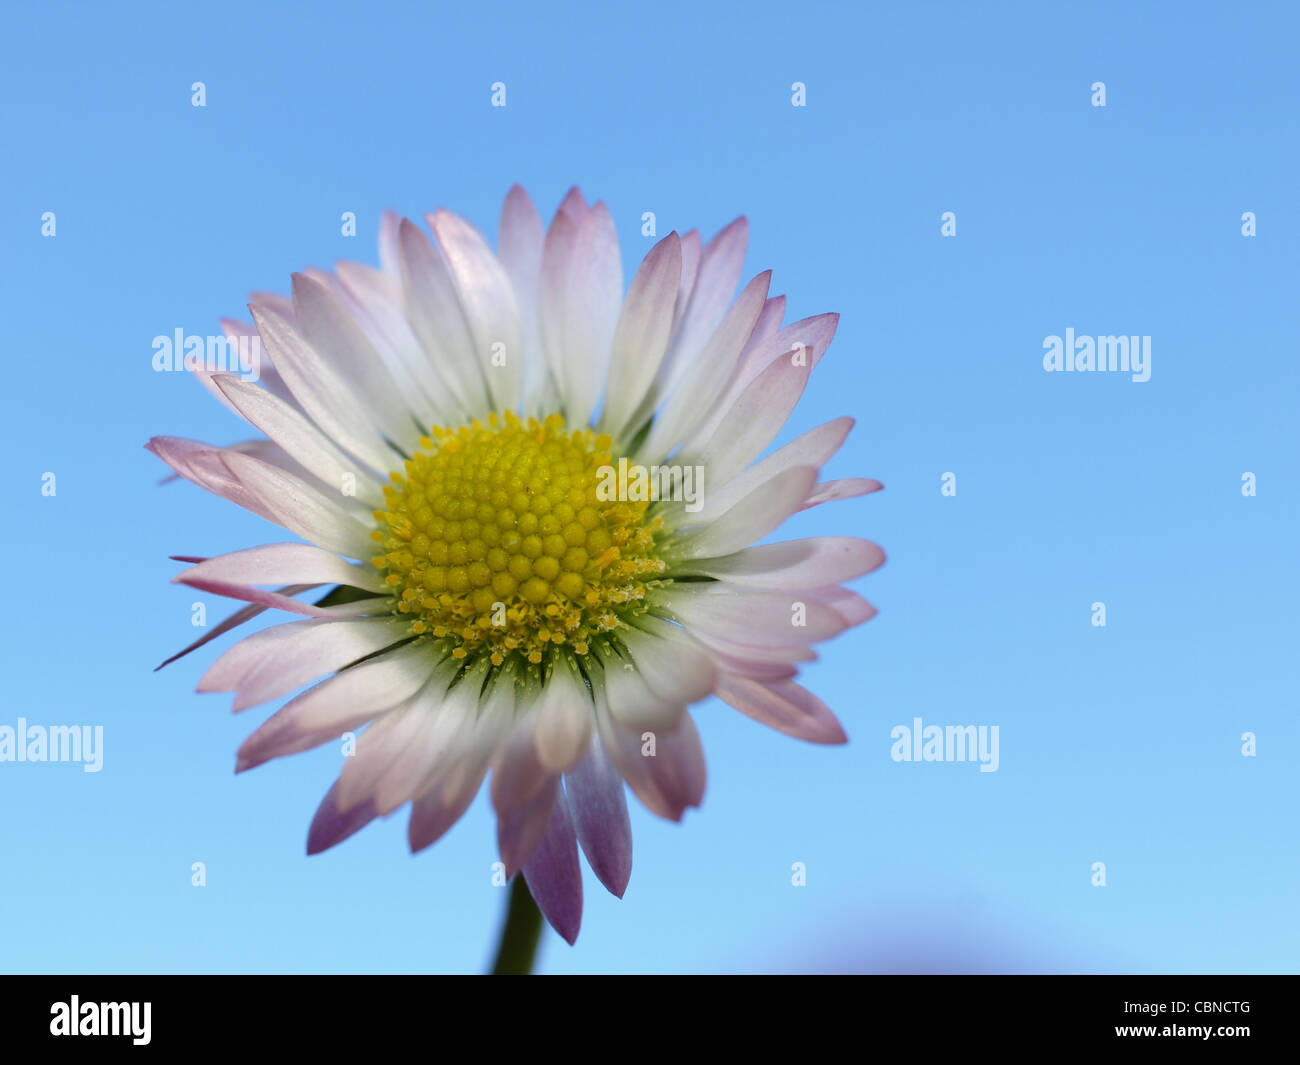 Daisy, Common Daisy, Lawn Daisy, English Daisy / Bellis perennis / Gänseblümchen Stock Photo